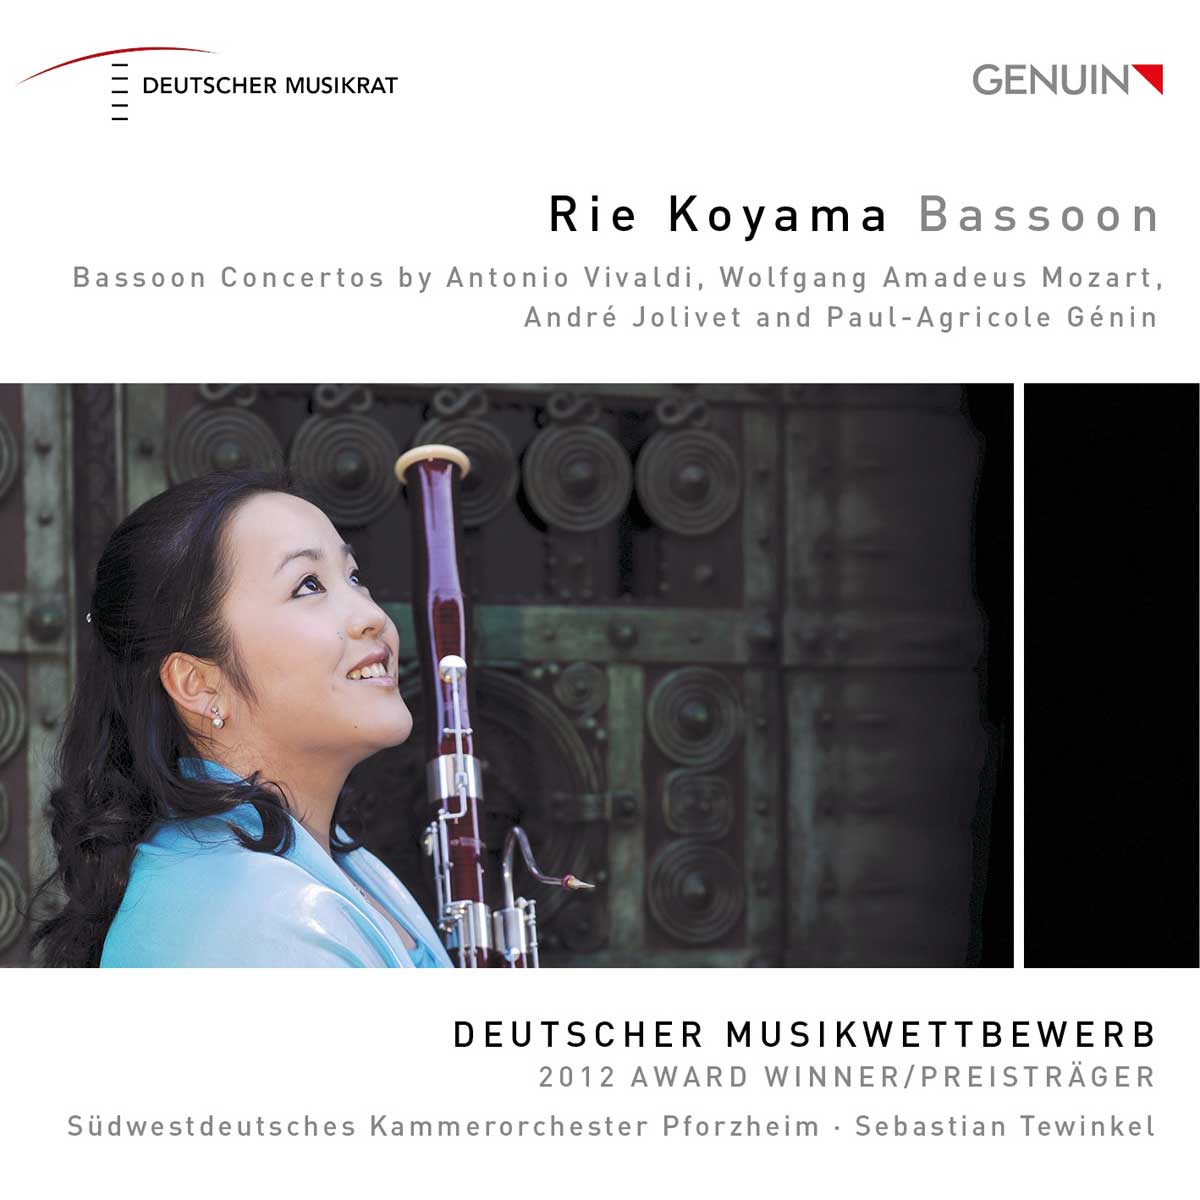 CD album cover 'Rie Koyama, Fagott' (GEN 13288) with Rie Koyama, Südwestdeutsches Kammerorchester Pforzheim ...